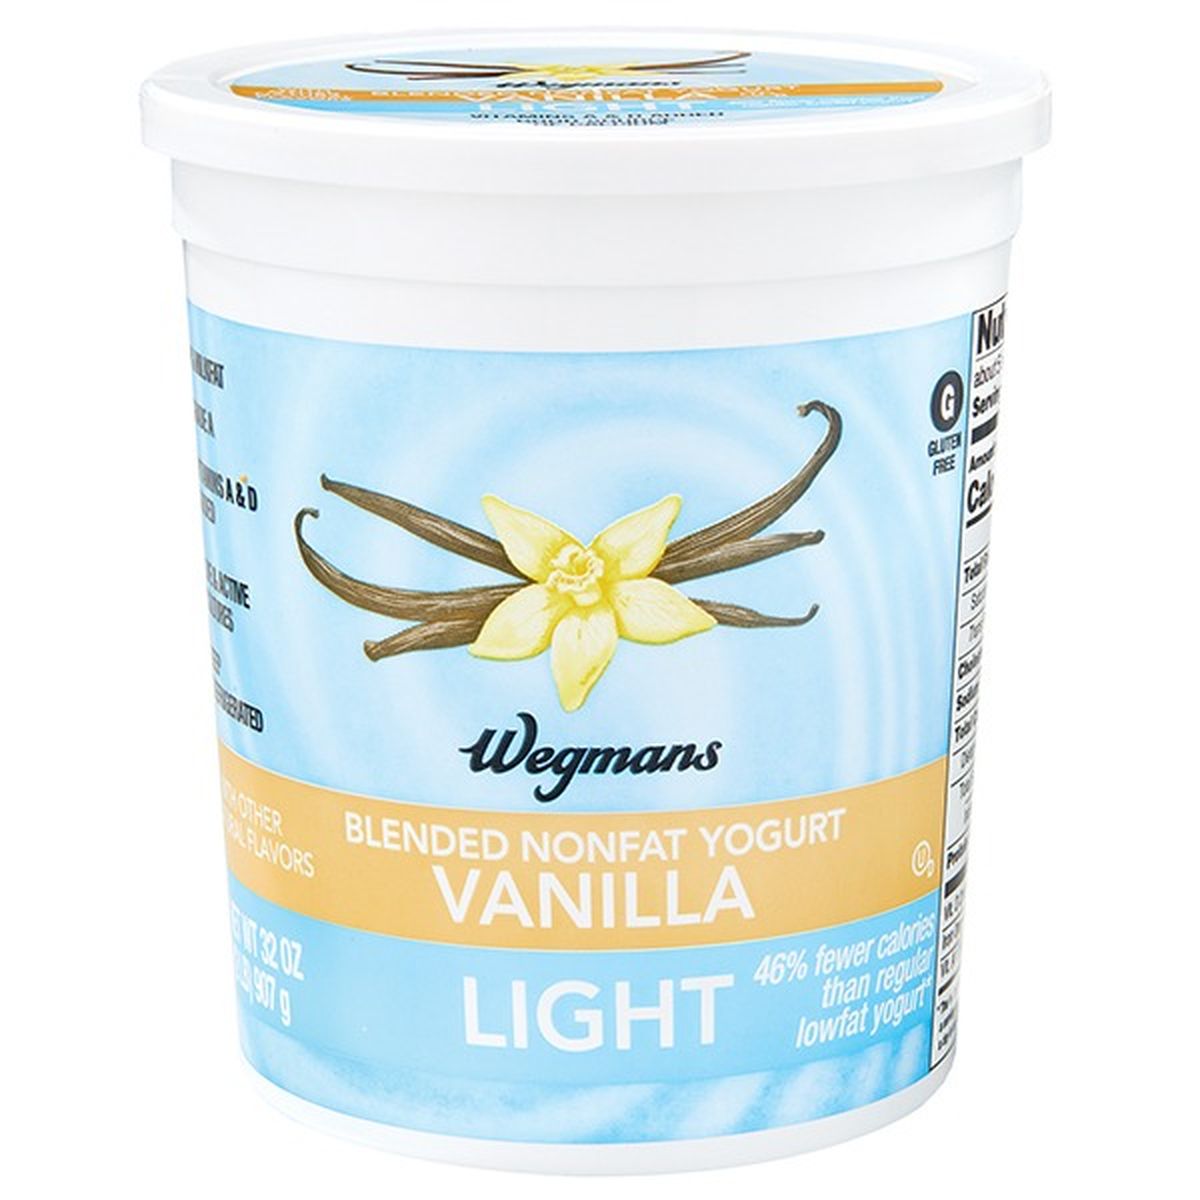 Calories in Wegmans Light Blended Vanilla Nonfat Yogurt